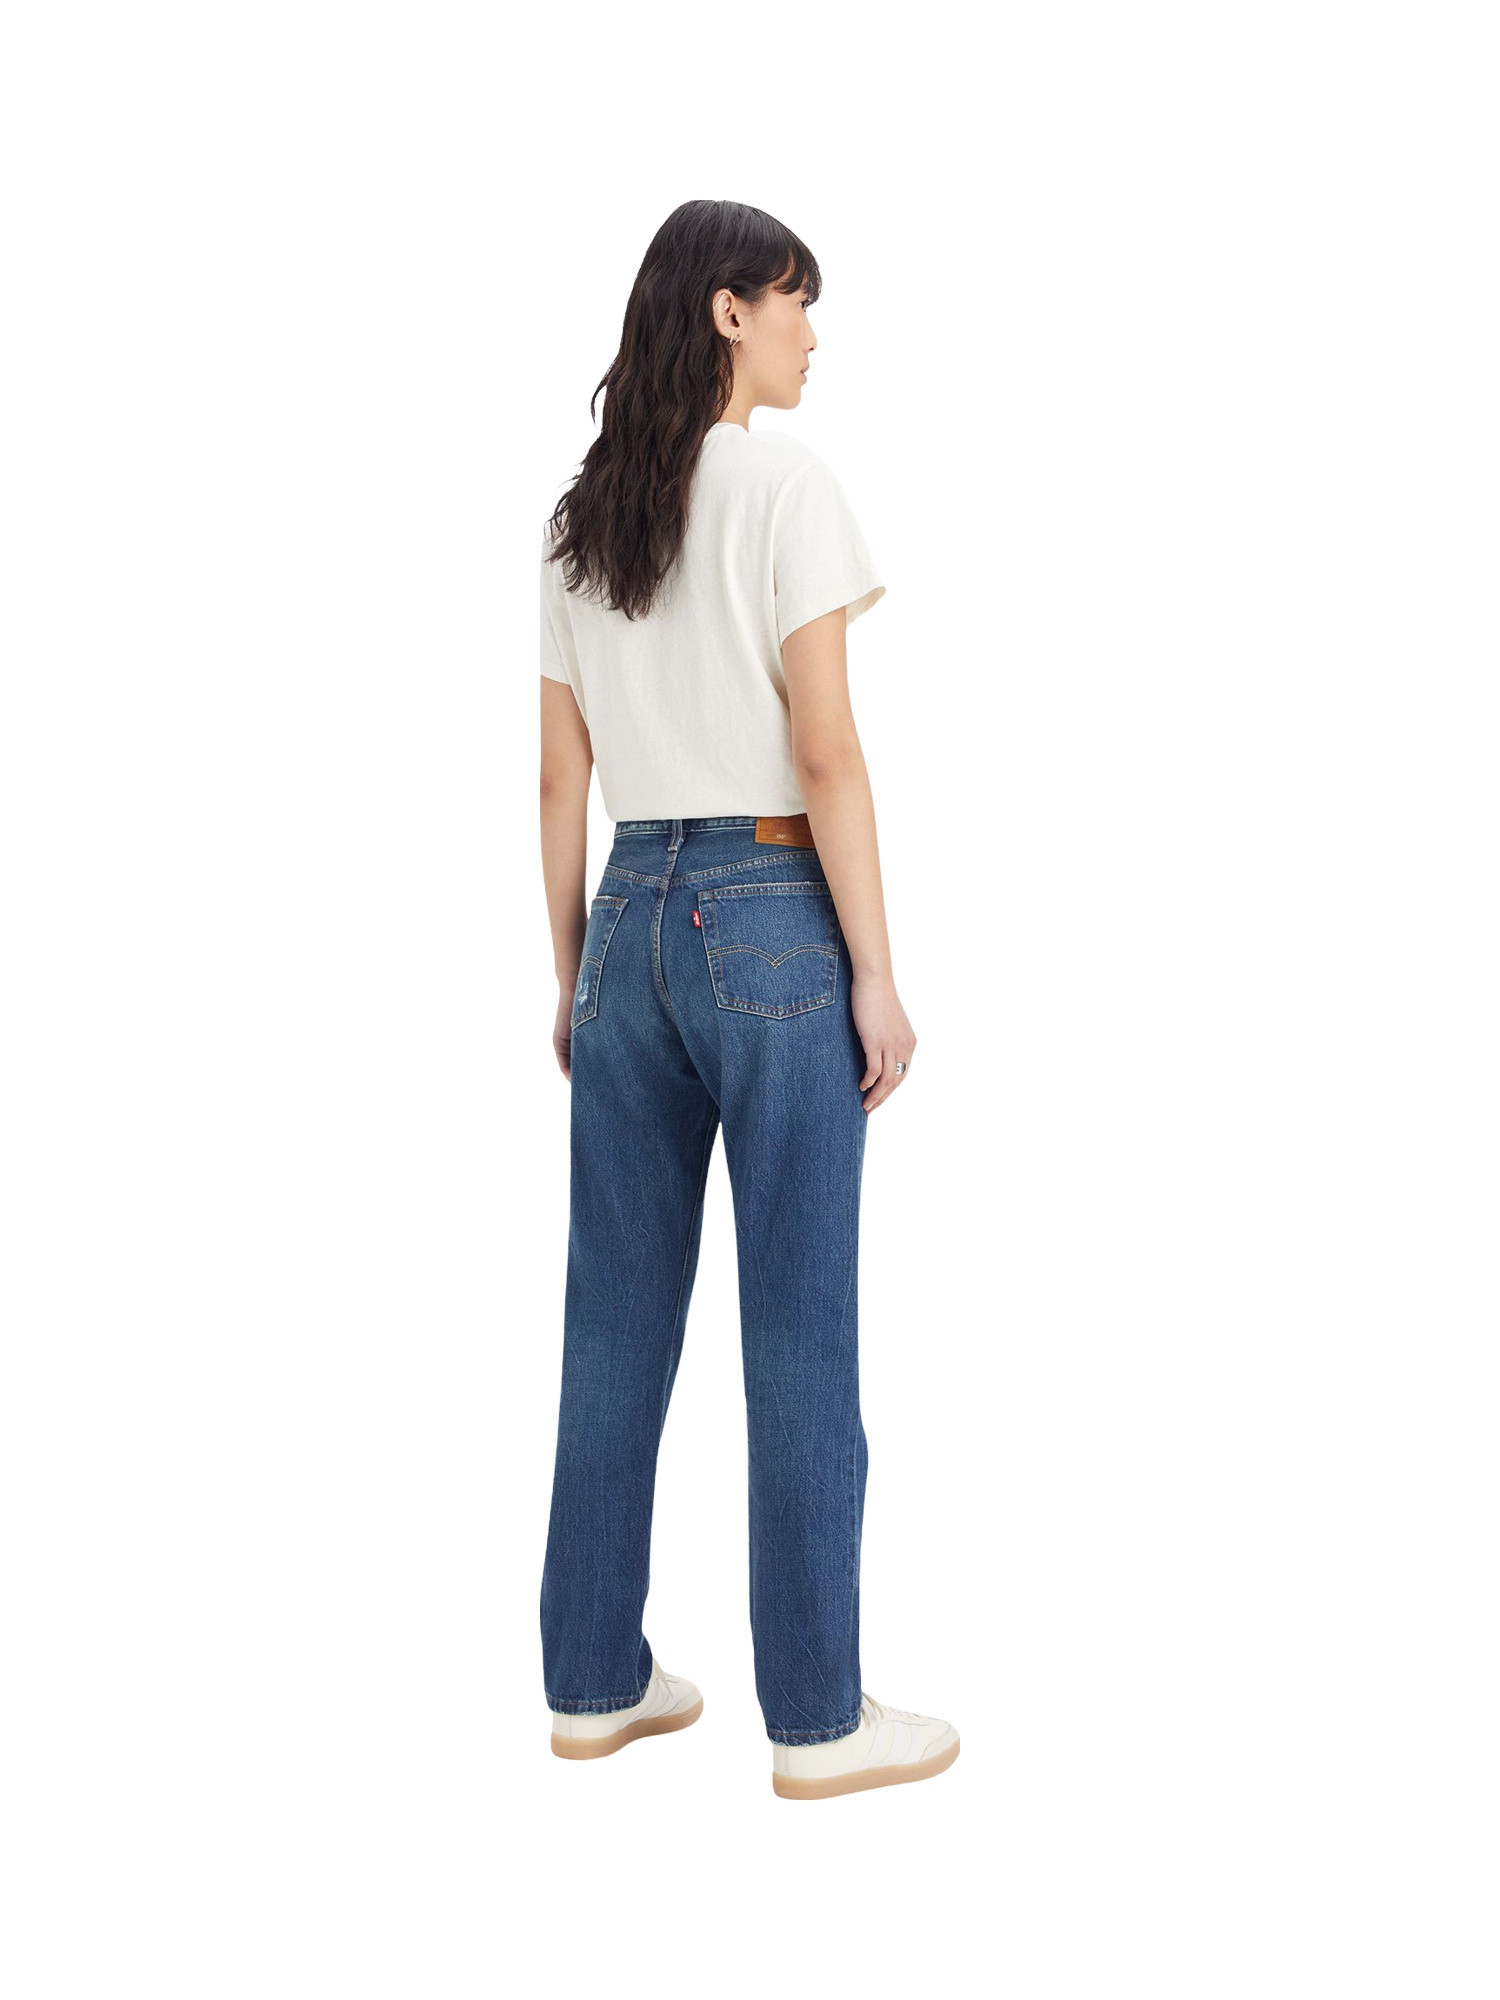 Levi's - jeans 501® original con cimosa, Denim, large image number 5